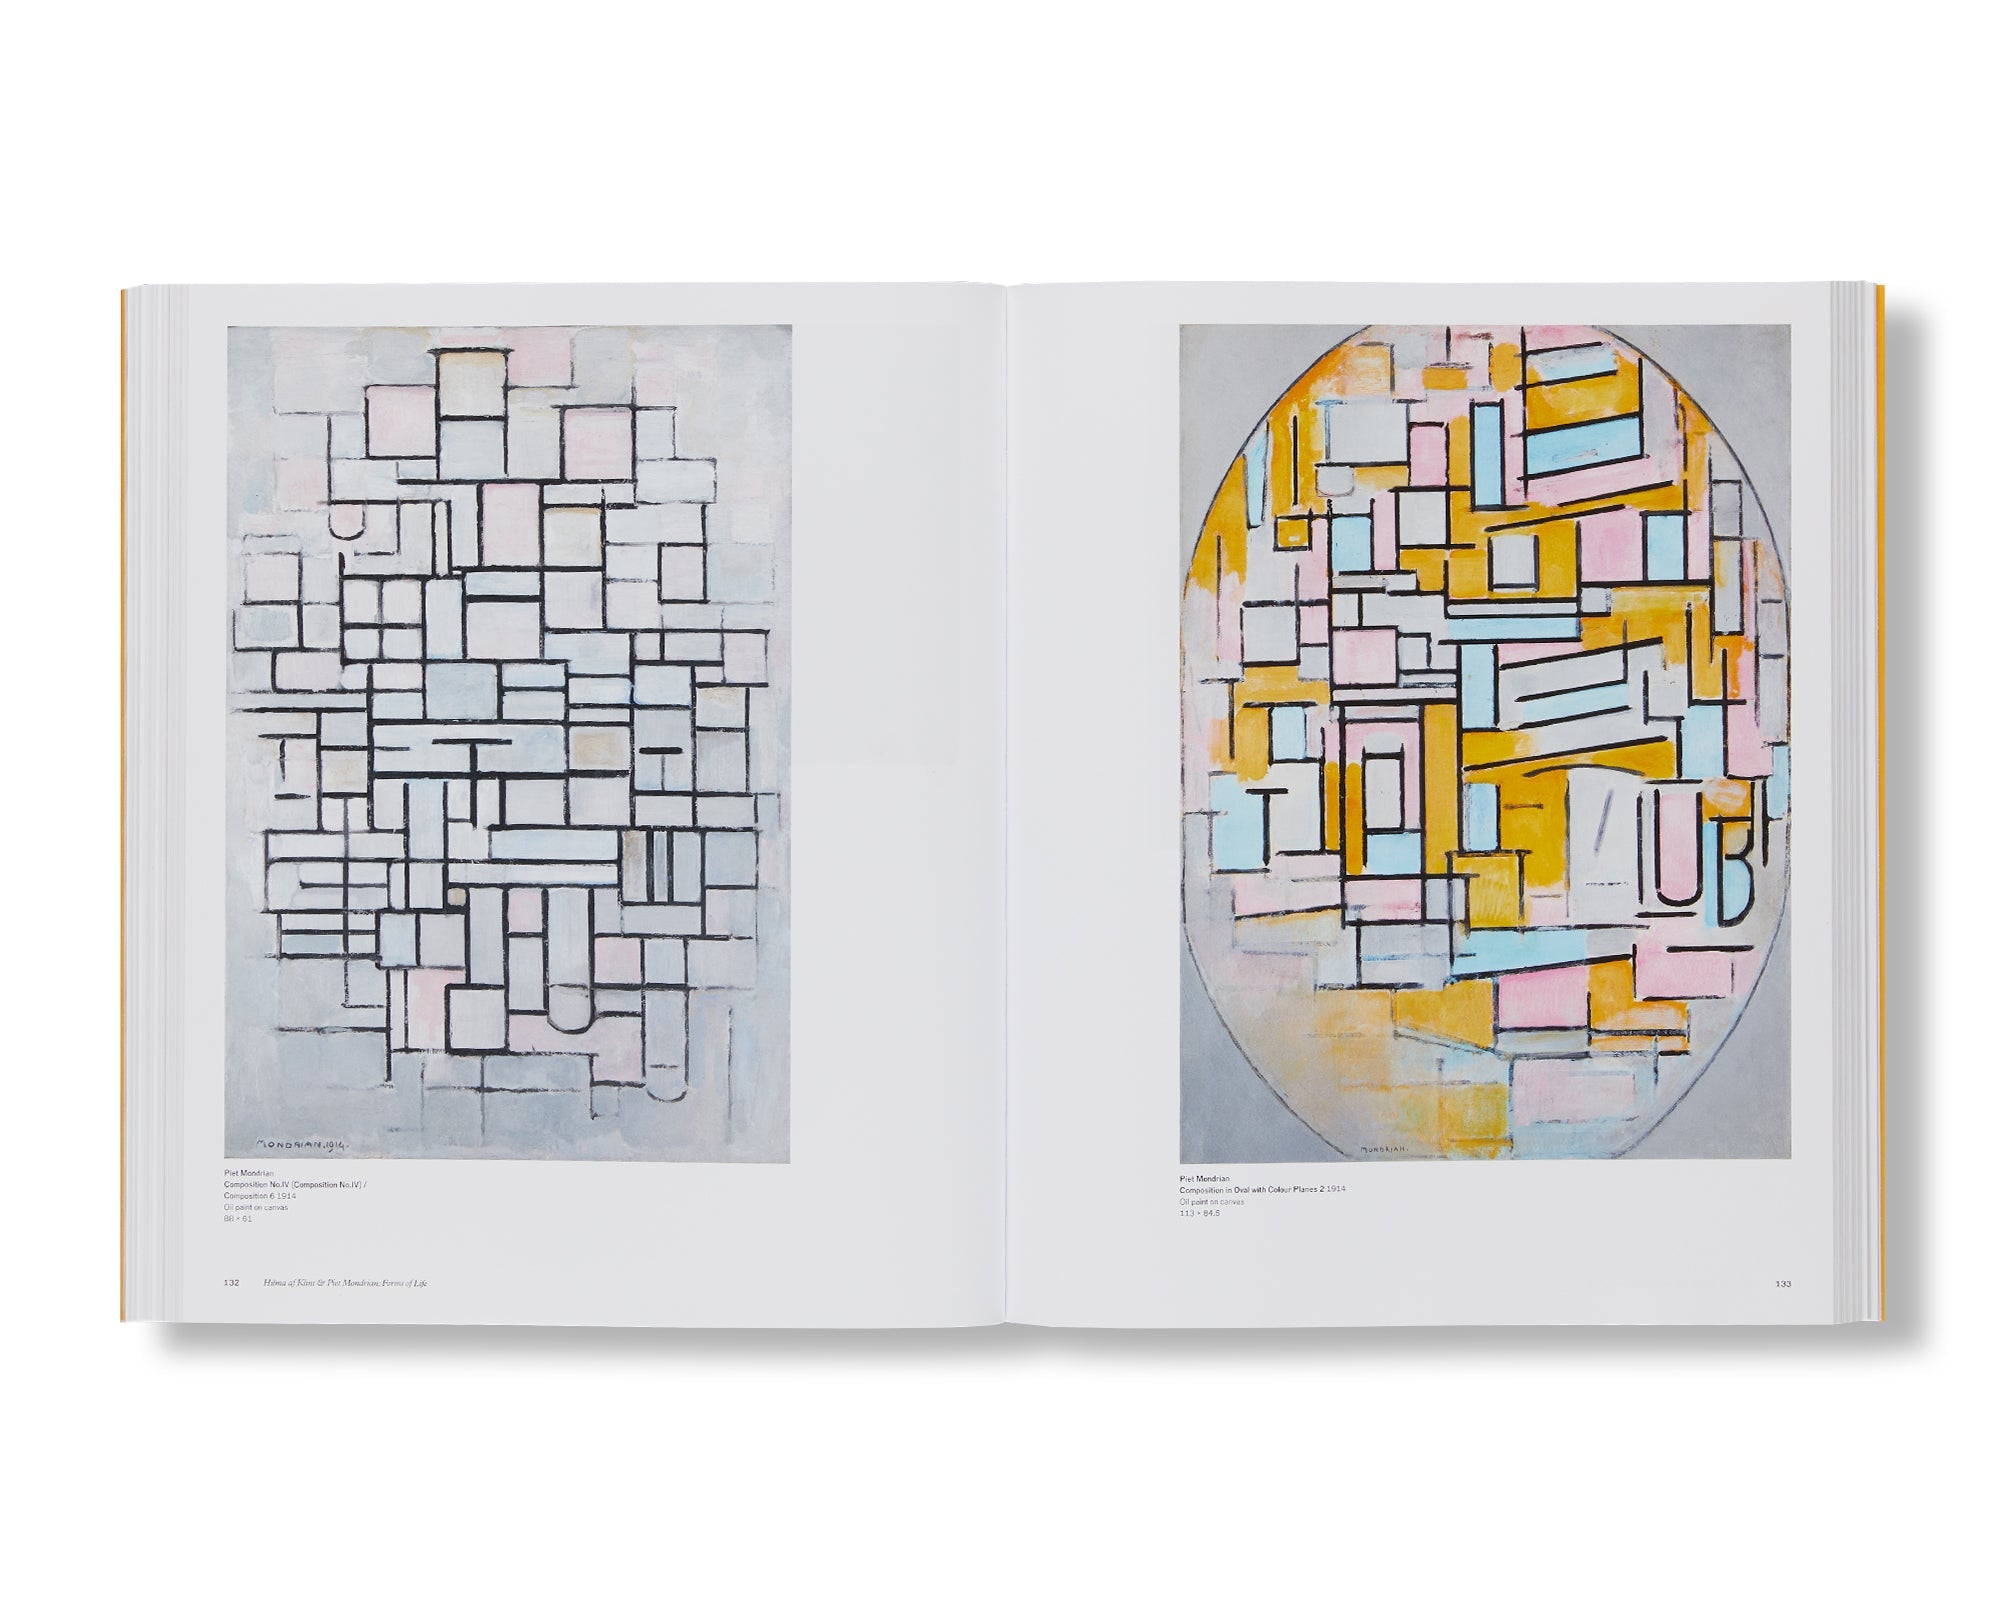 HILMA AF KLINT AND PIET MONDRIAN: FORMS OF LIFE by Hilma af Klint, Piet Mondrian [HARDCOVER]